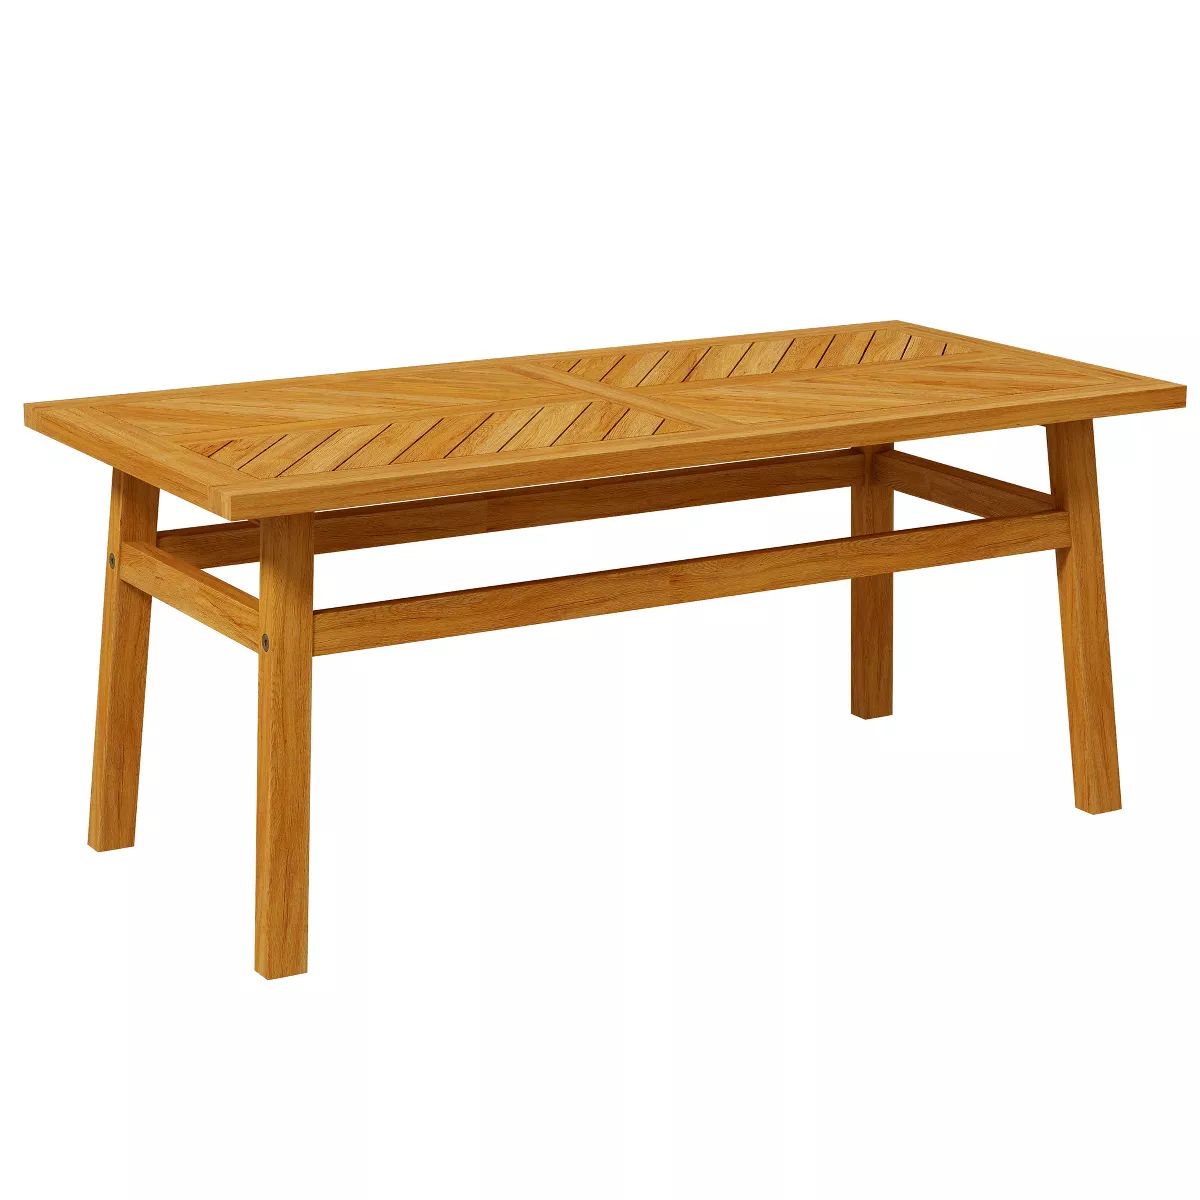 Outsunny Outdoor Coffee Table, Acacia Wood Rustic Patio Table for Garden, Backyard, Balcony, Deck... | Target